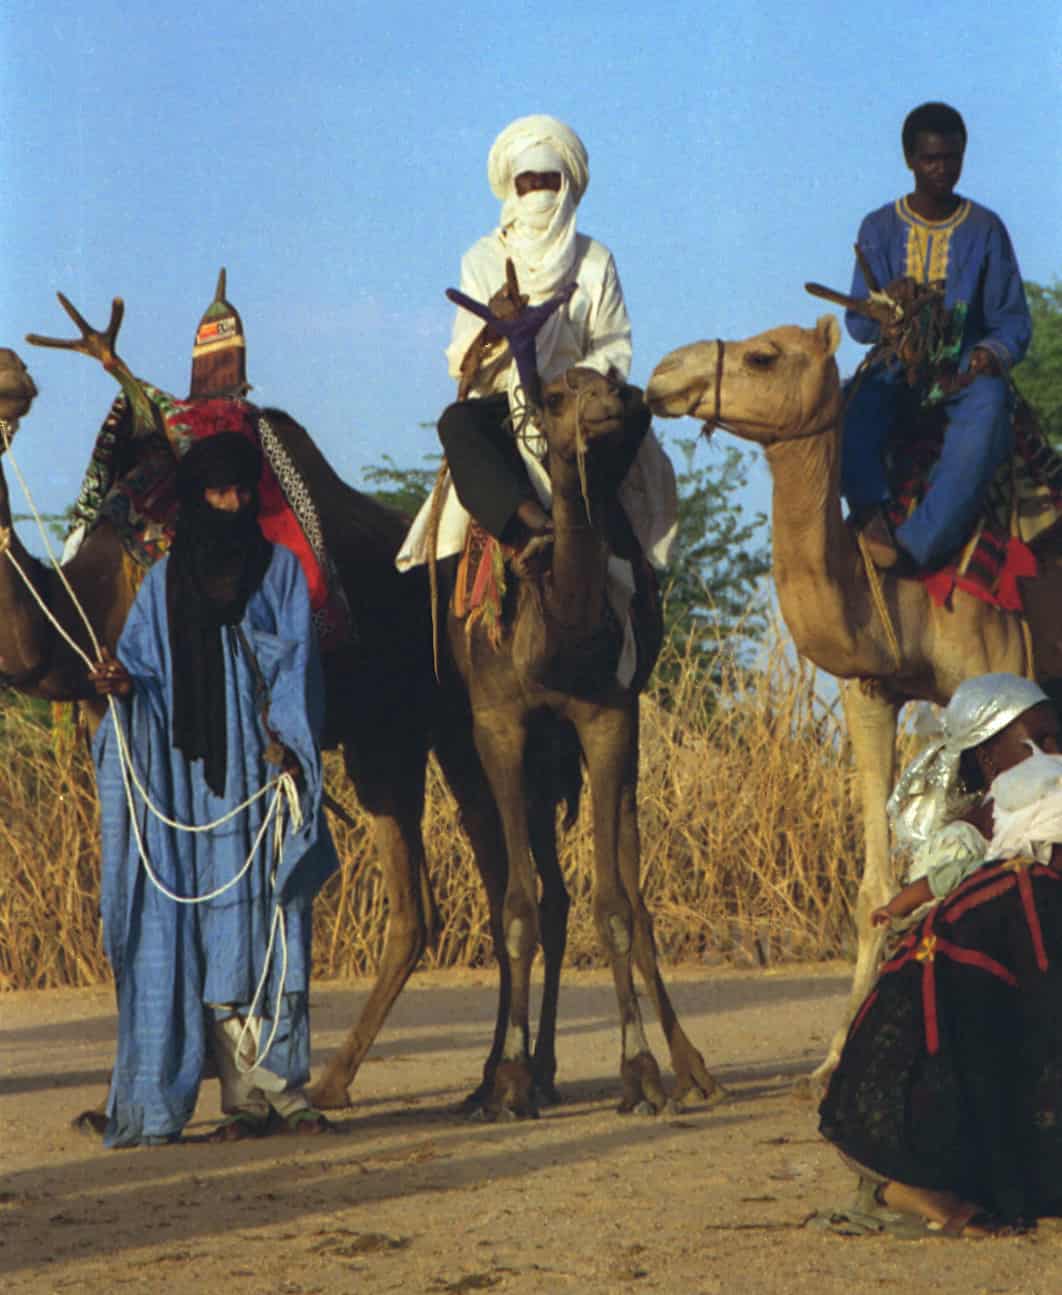 Tuareg nel deserto del Sahara - Viaggio in baule